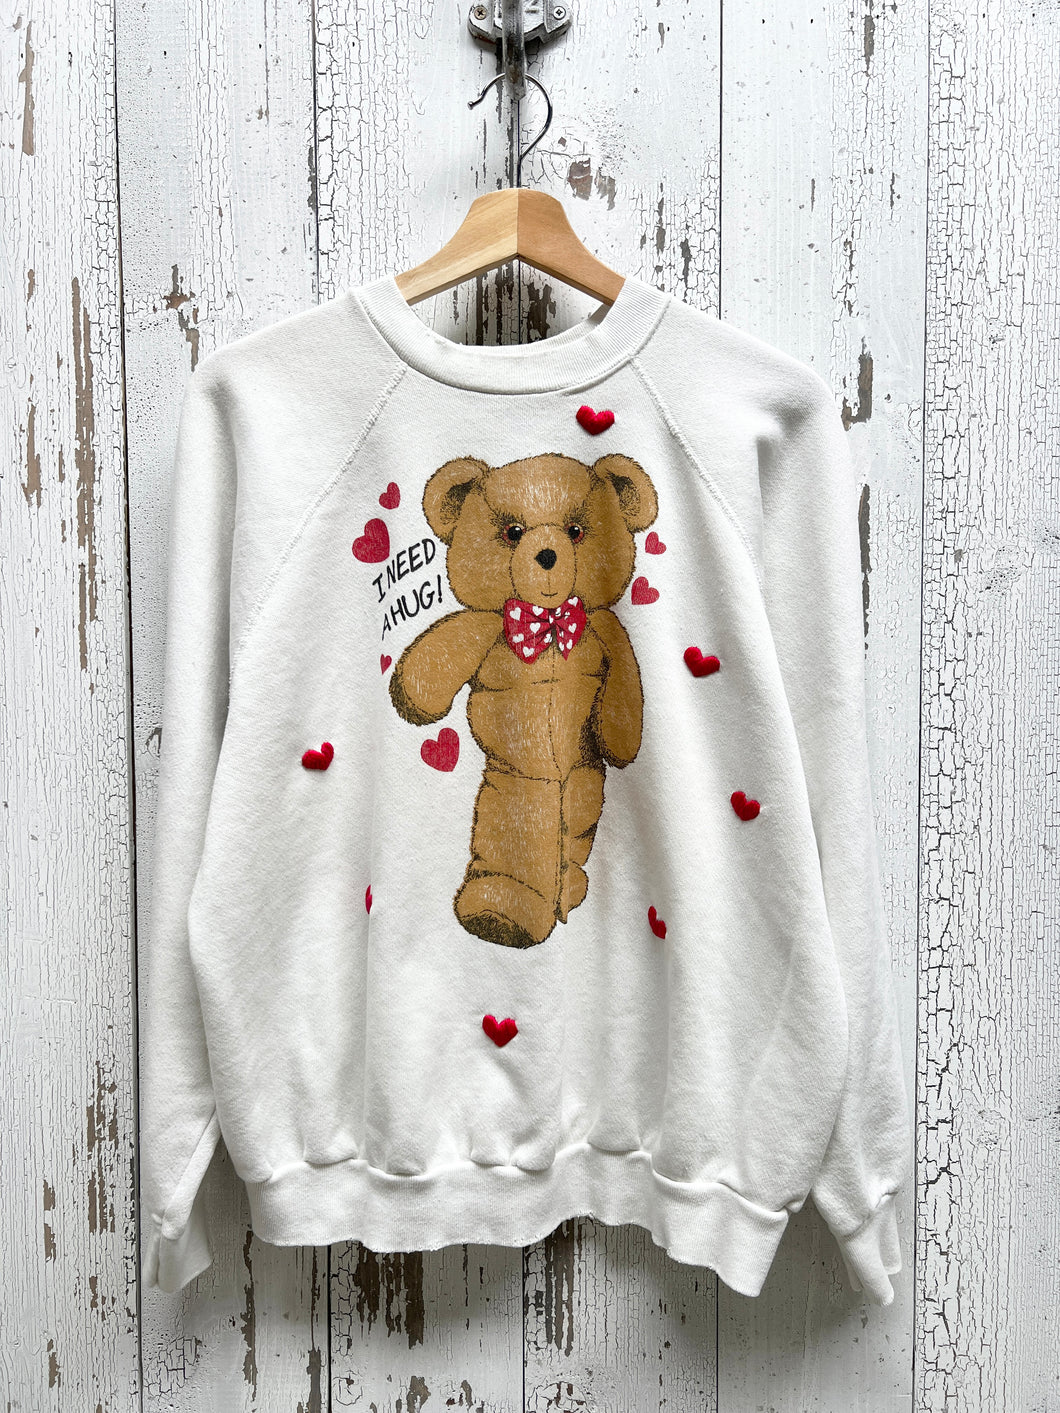 I Need Hug Teddy Bear Sweatshirt -M/L-Customize Your Embroidery Wording